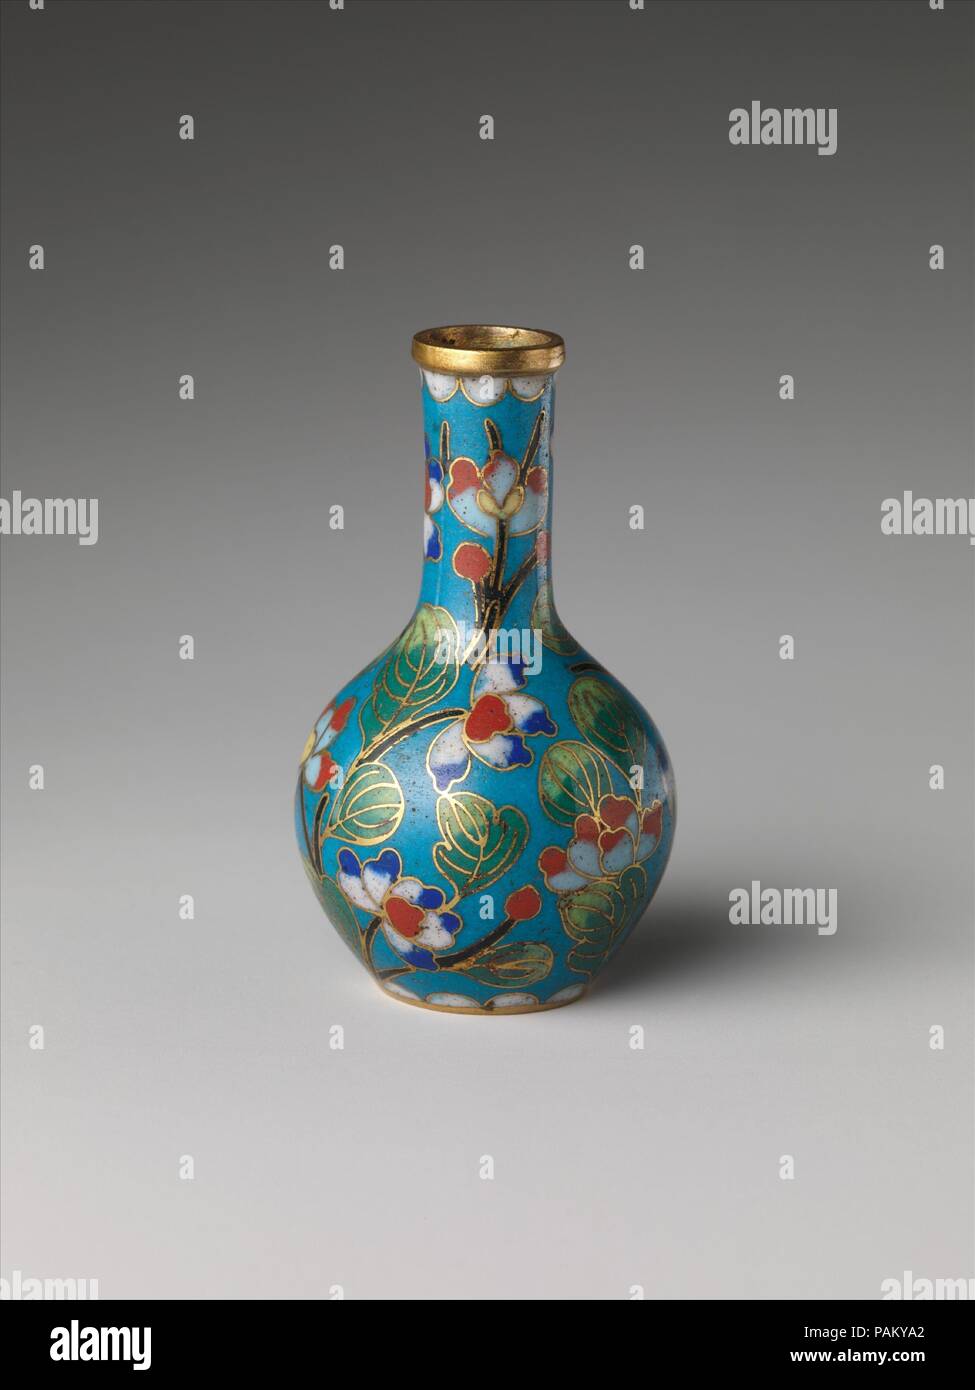 Vase. Culture: China. Dimensions: H. 2 1/2 in. (6.4 cm). Date: 19th century. Museum: Metropolitan Museum of Art, New York, USA. Stock Photo